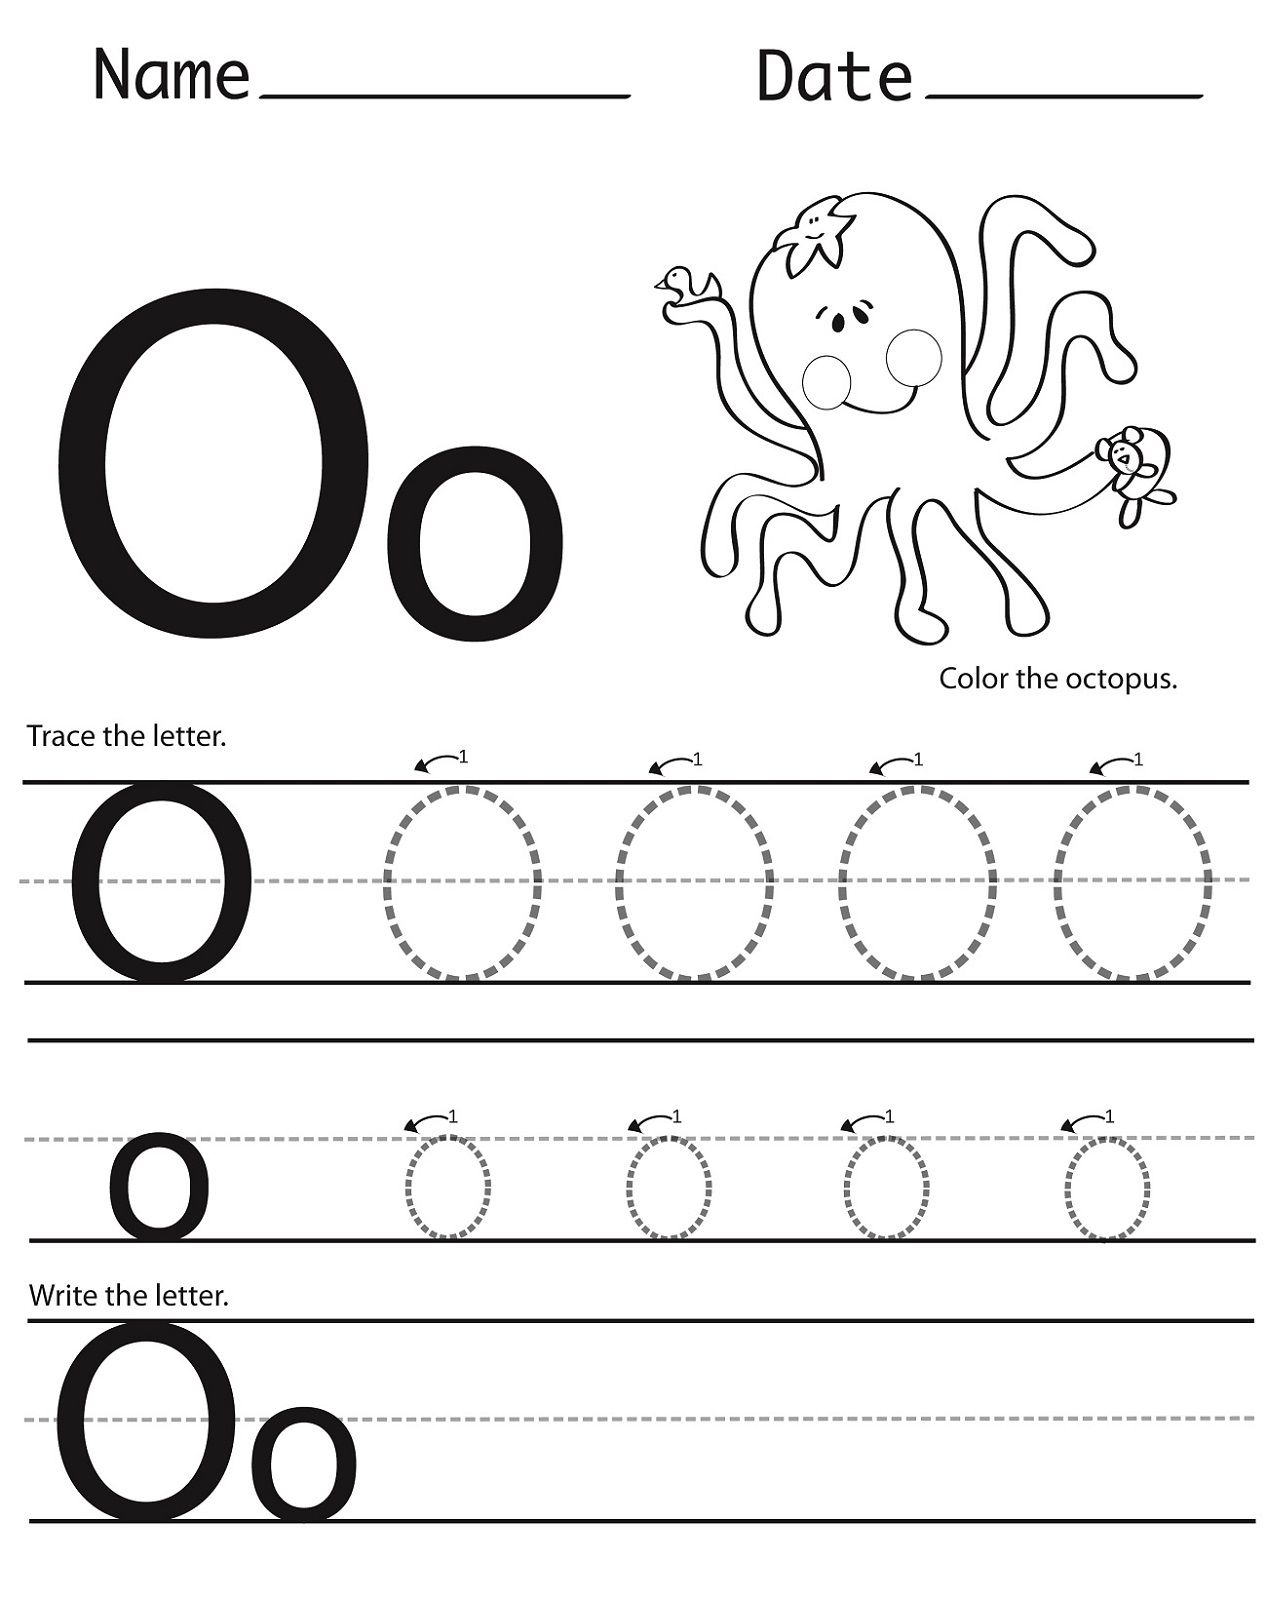 Letter O Worksheets - Kids Learning Activity | Letter O within Letter O Tracing Worksheets Preschool